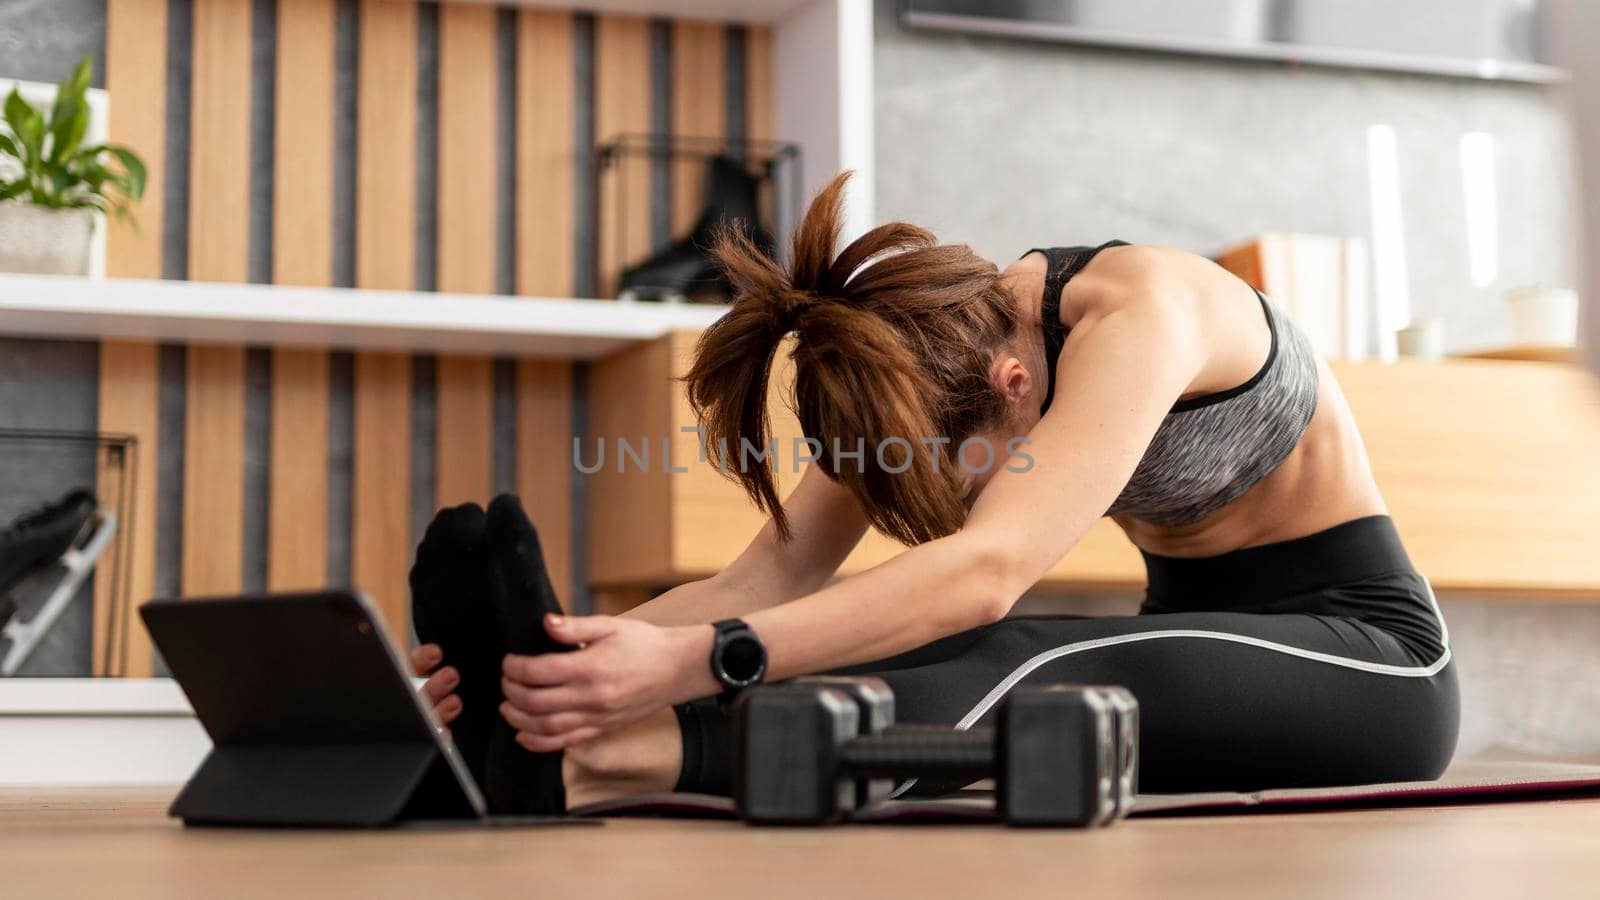 full shot woman stretching mat. High quality photo by Zahard